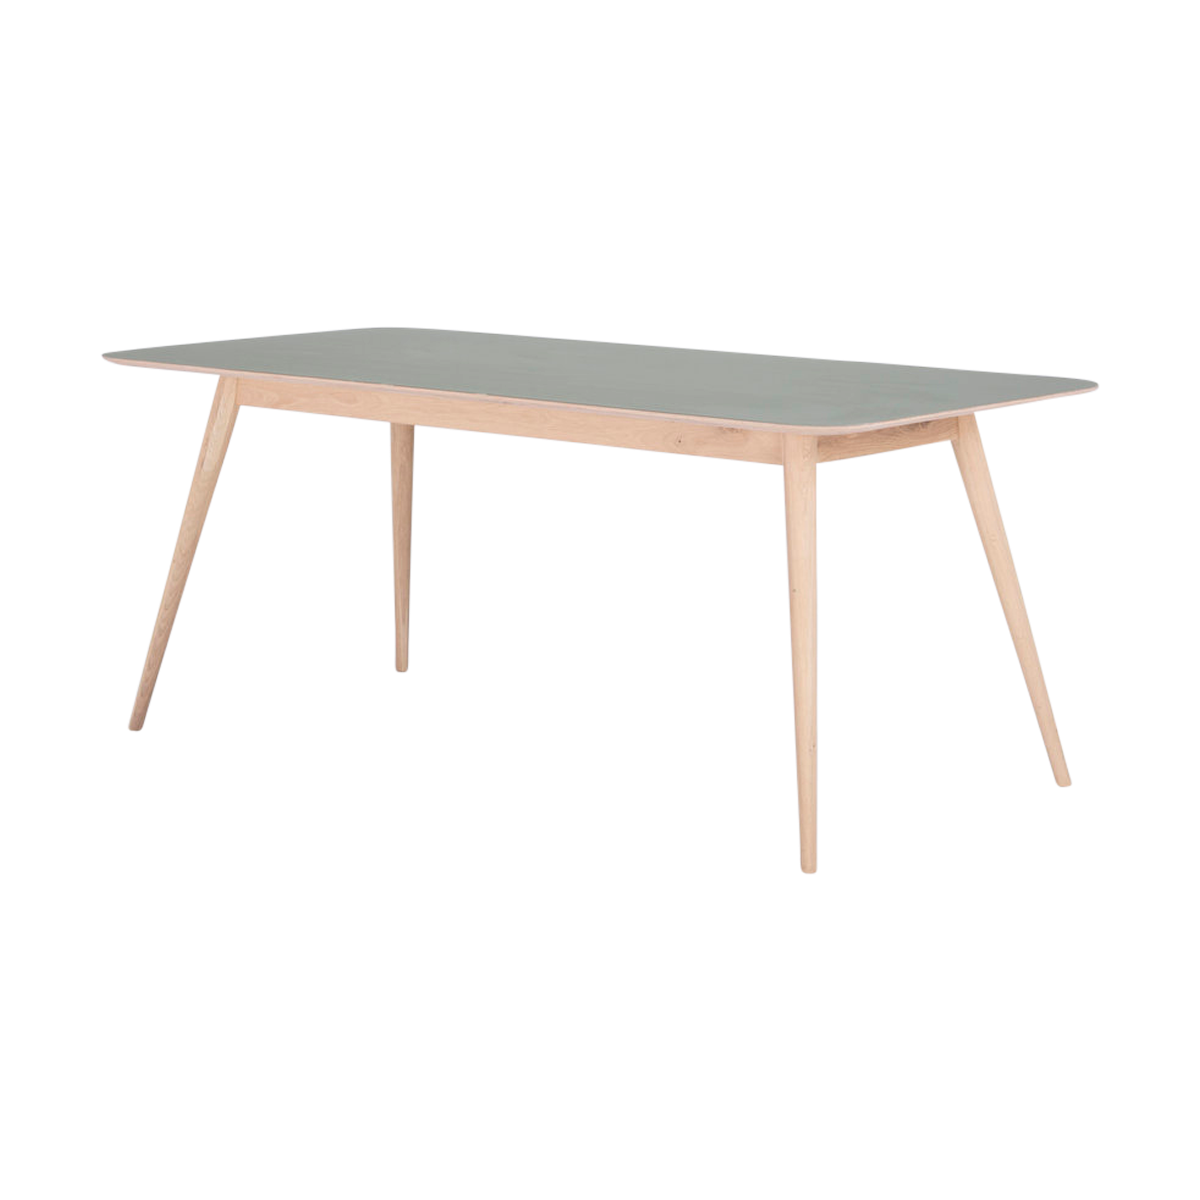 Stafa table houten eettafel whitewash - met linoleum tafelblad dark olive - 200 x 90 cm